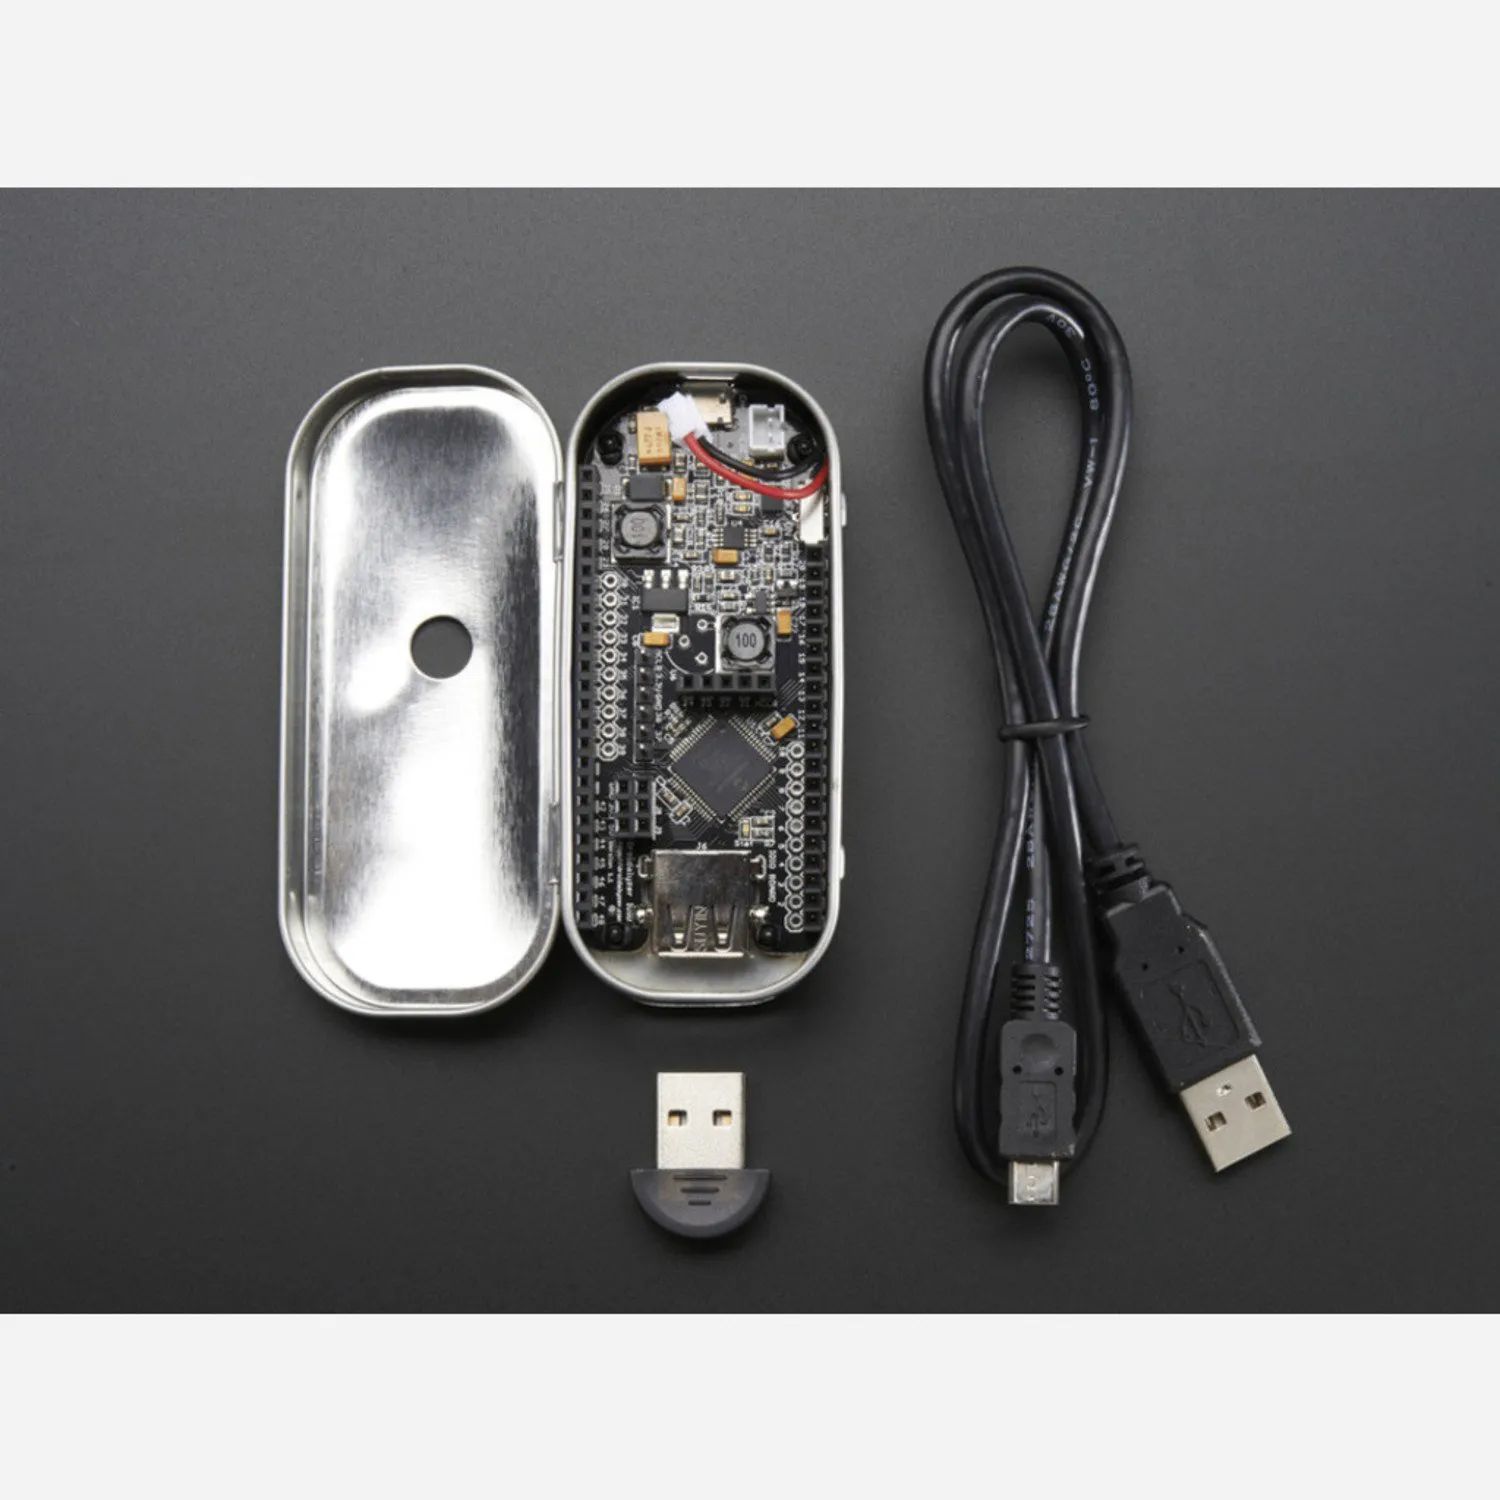 Photo of IOIO Mint - Portable Android Development Kit